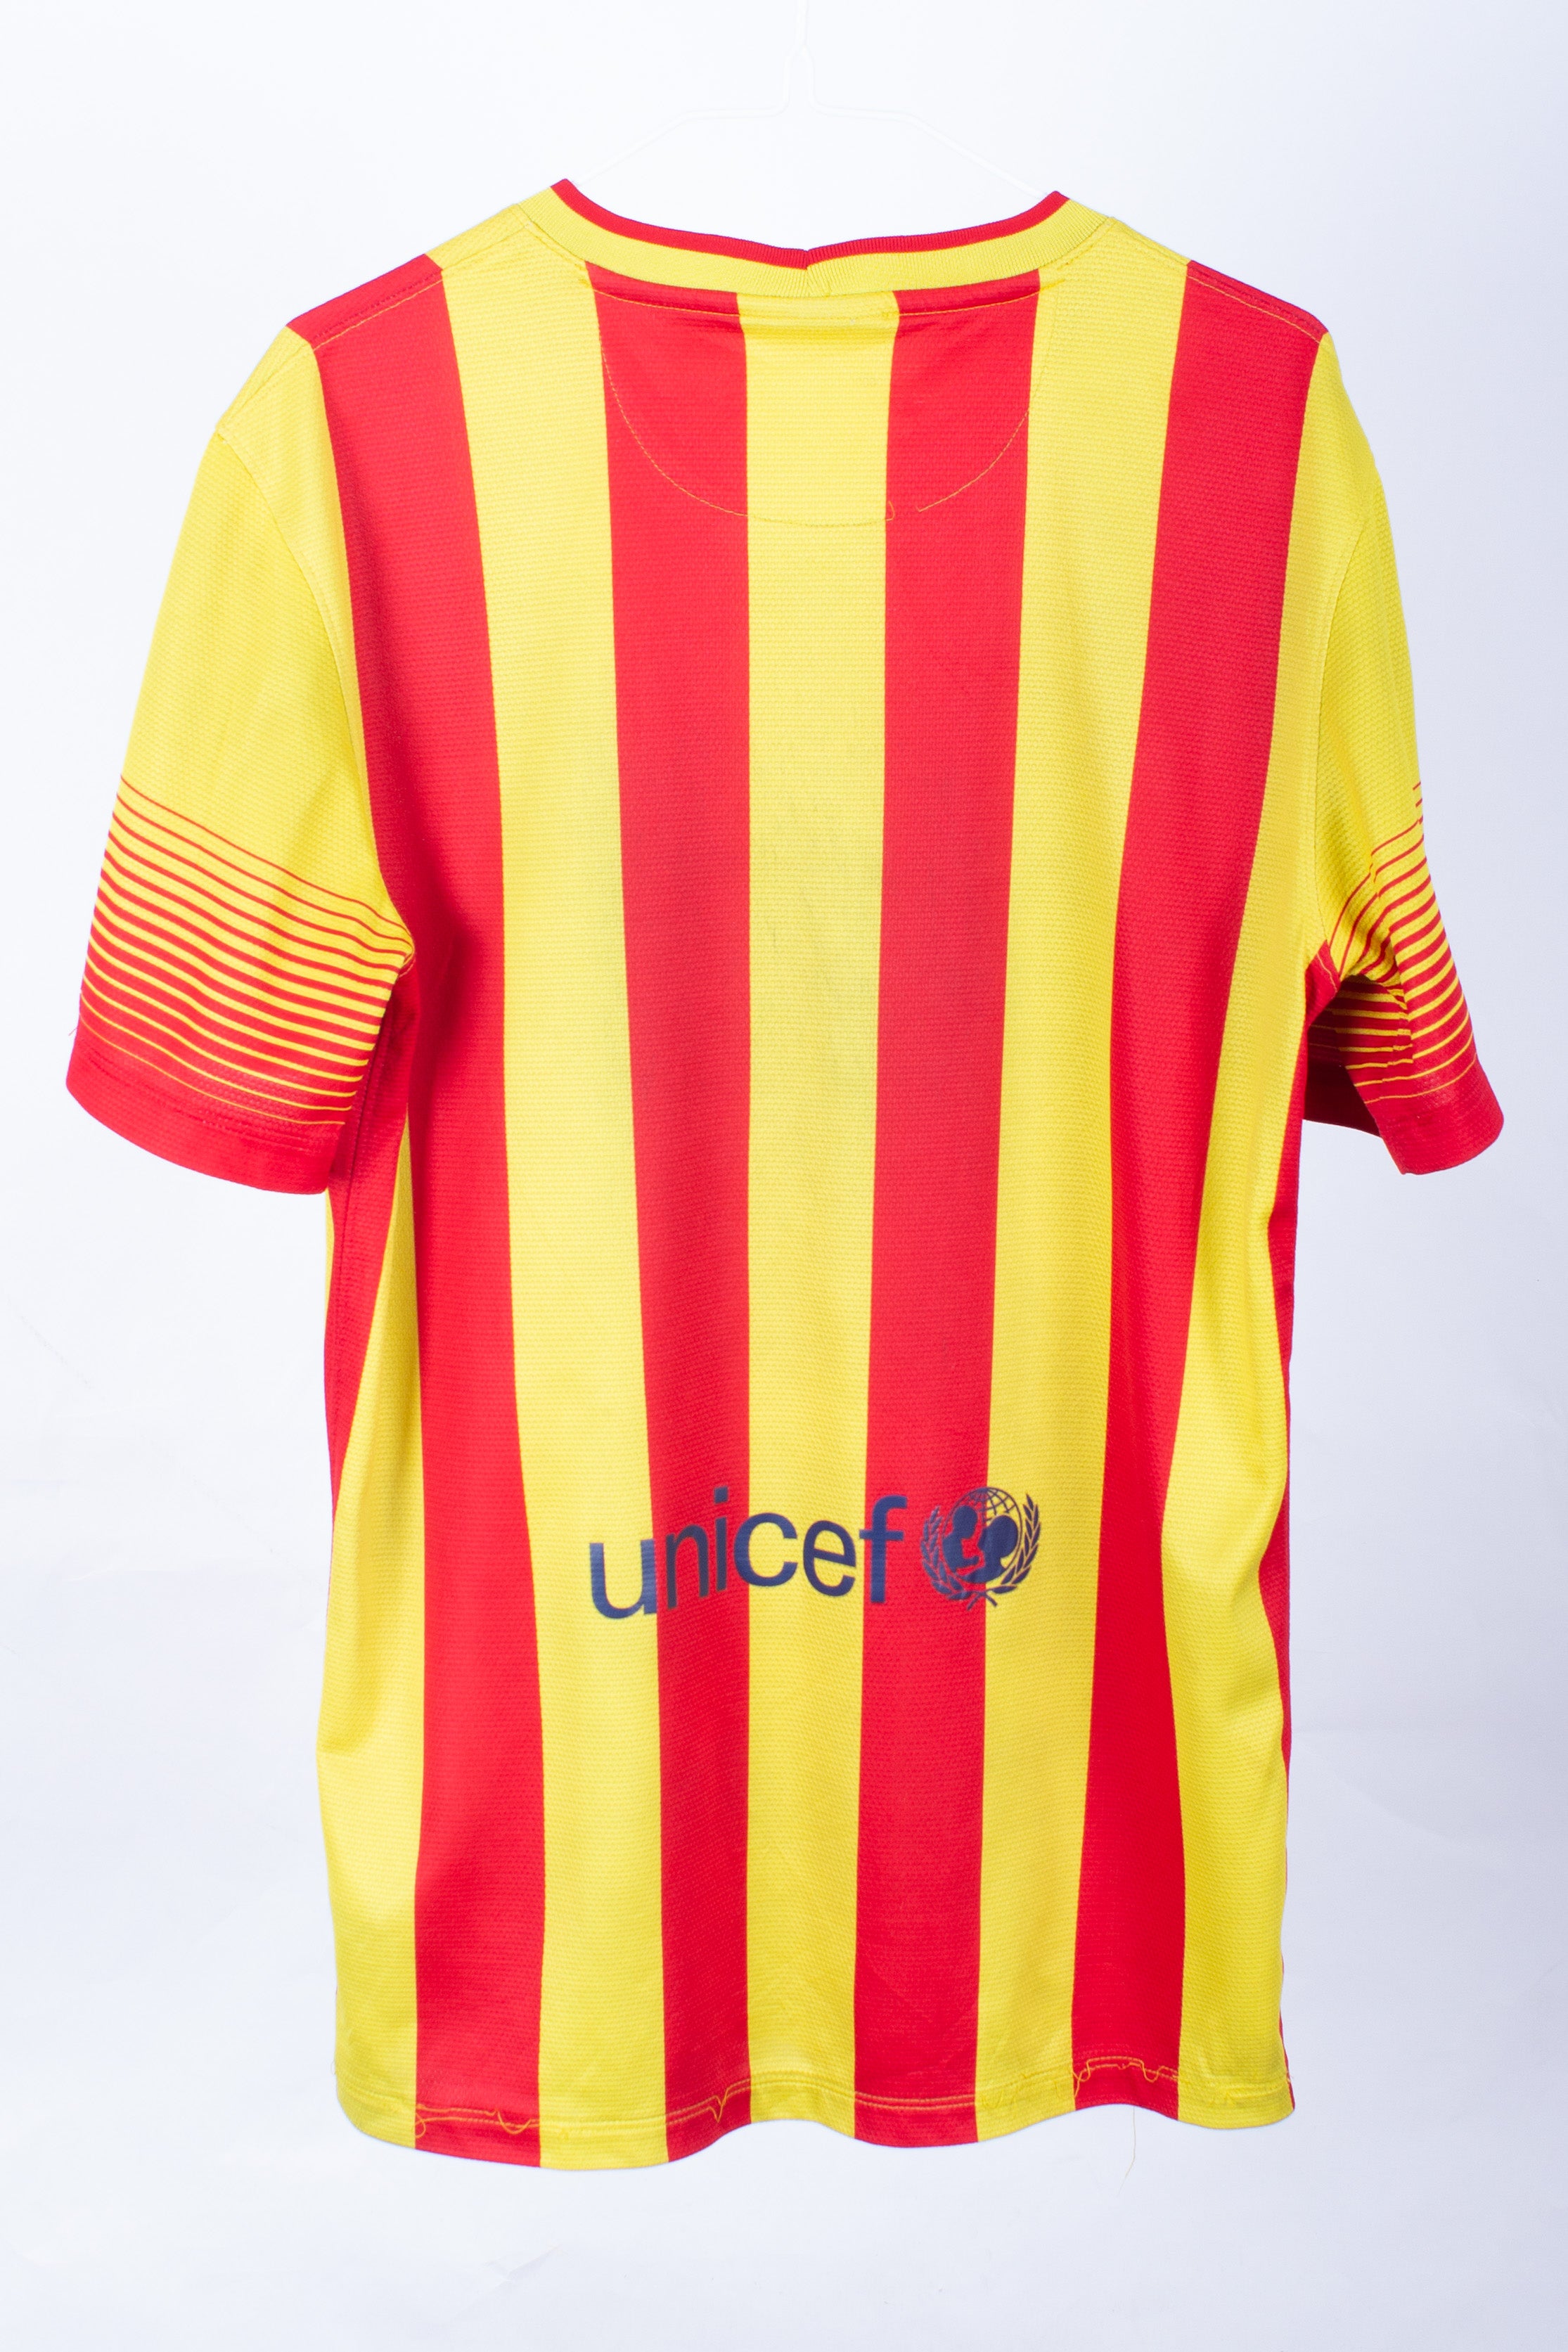 Barcelona 2013/14 Away Shirt